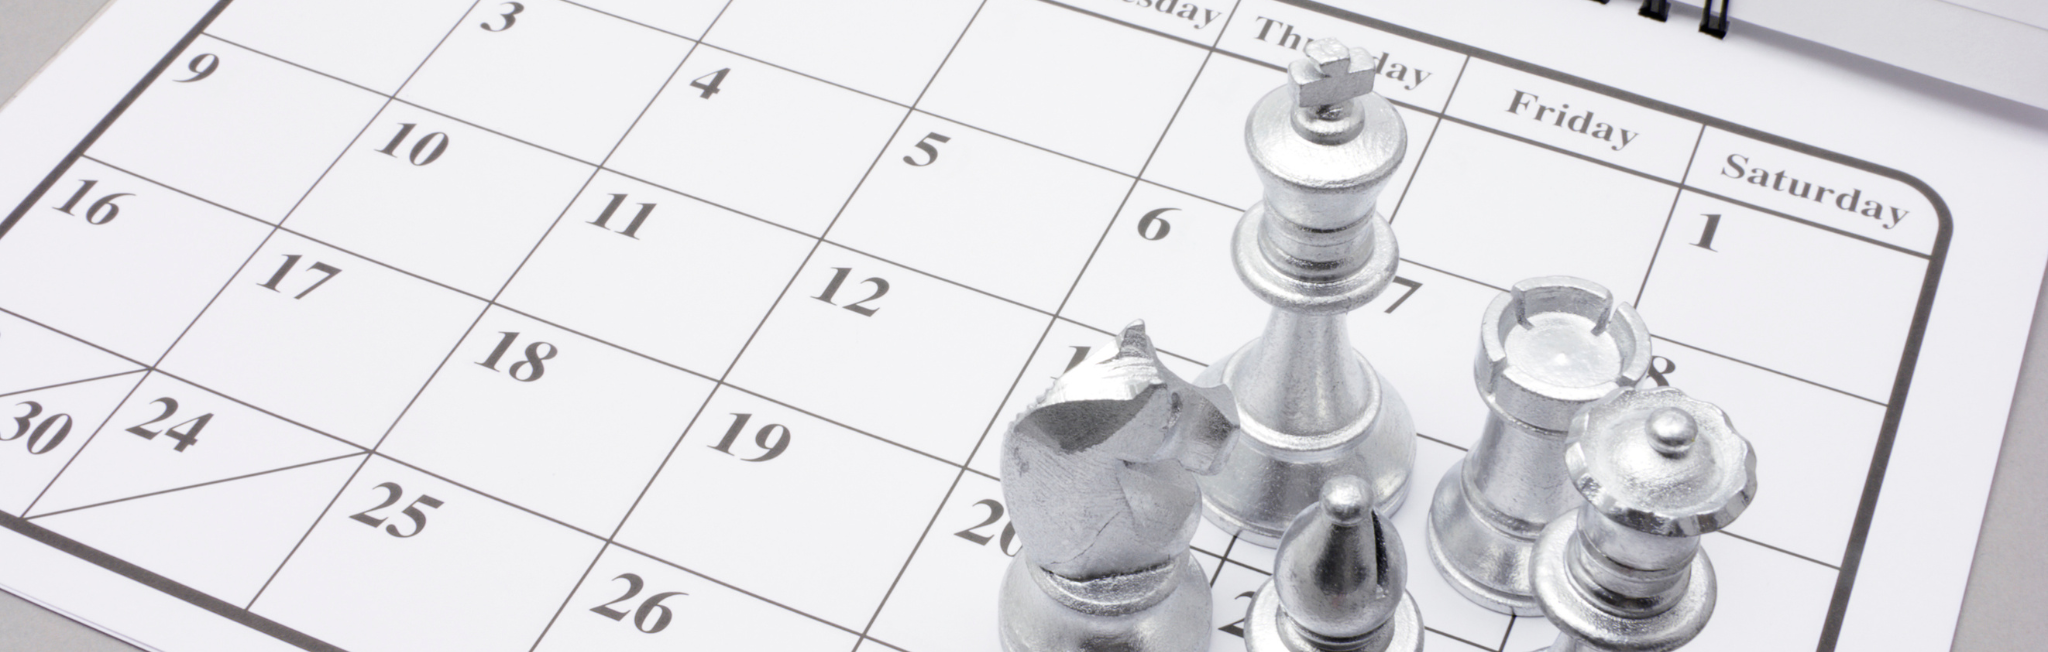 ChessPlus Calendar